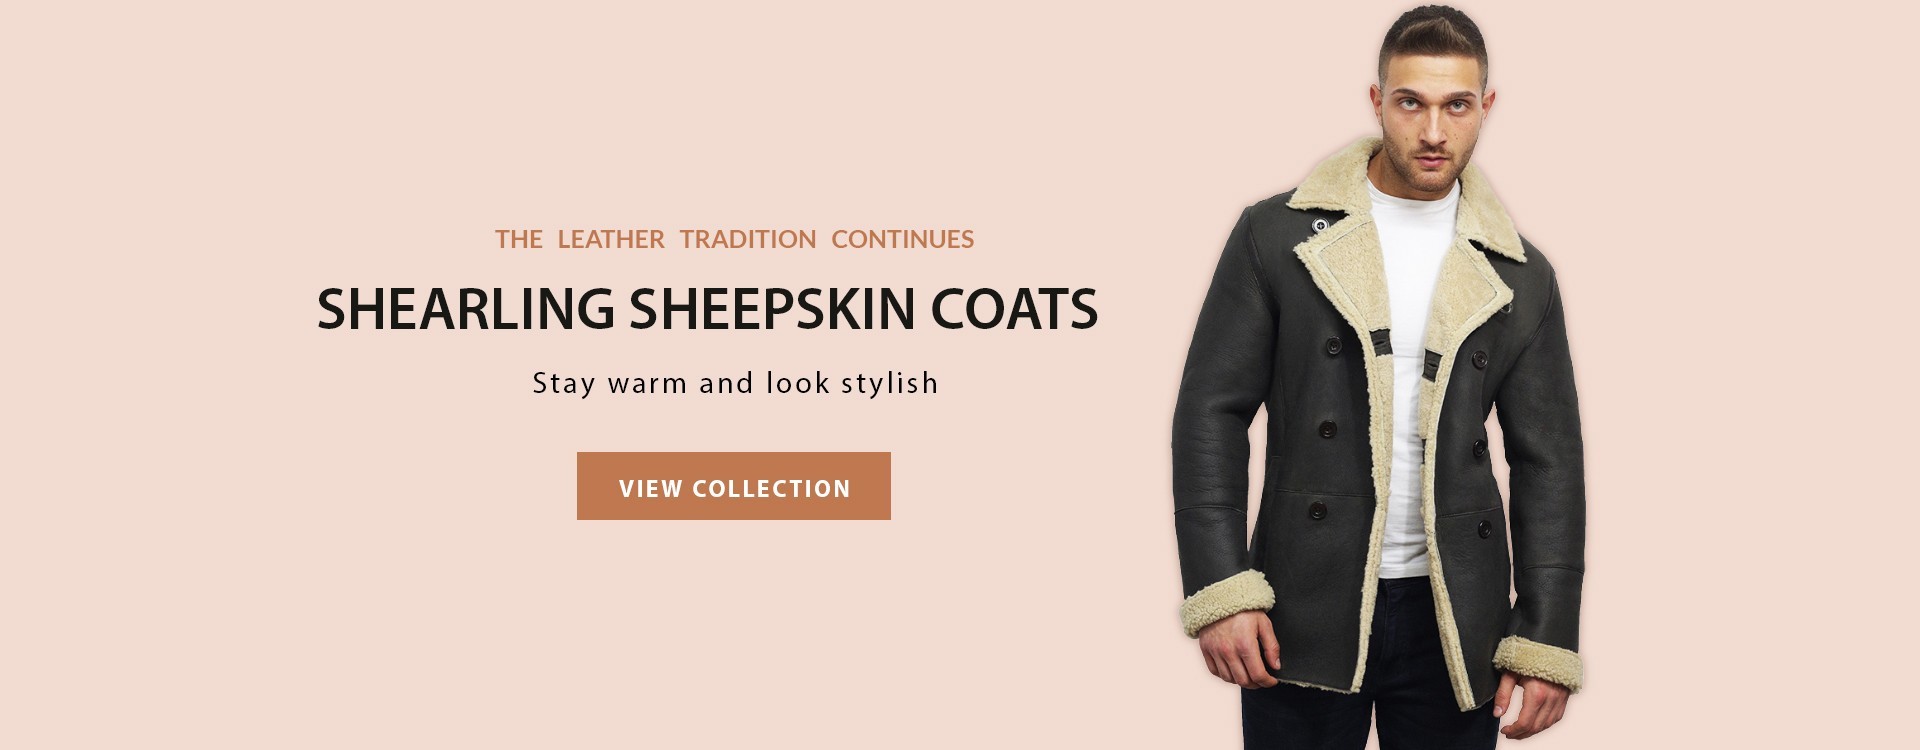 Mens leather shearling sheepskin coat